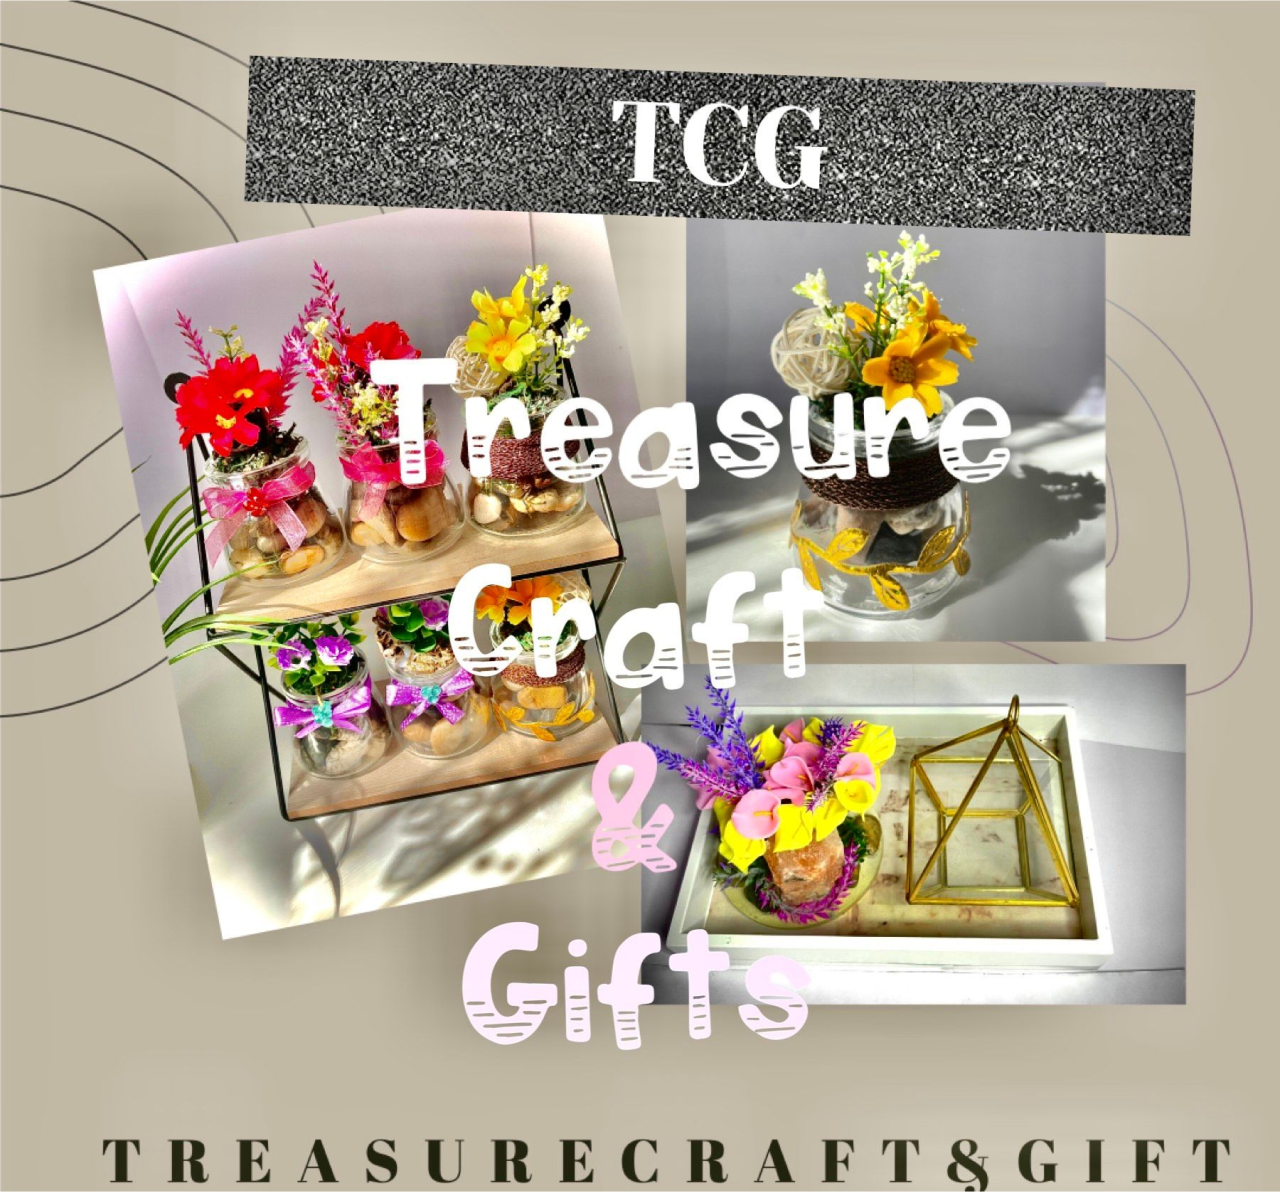 TreasureCraft&gift's logo